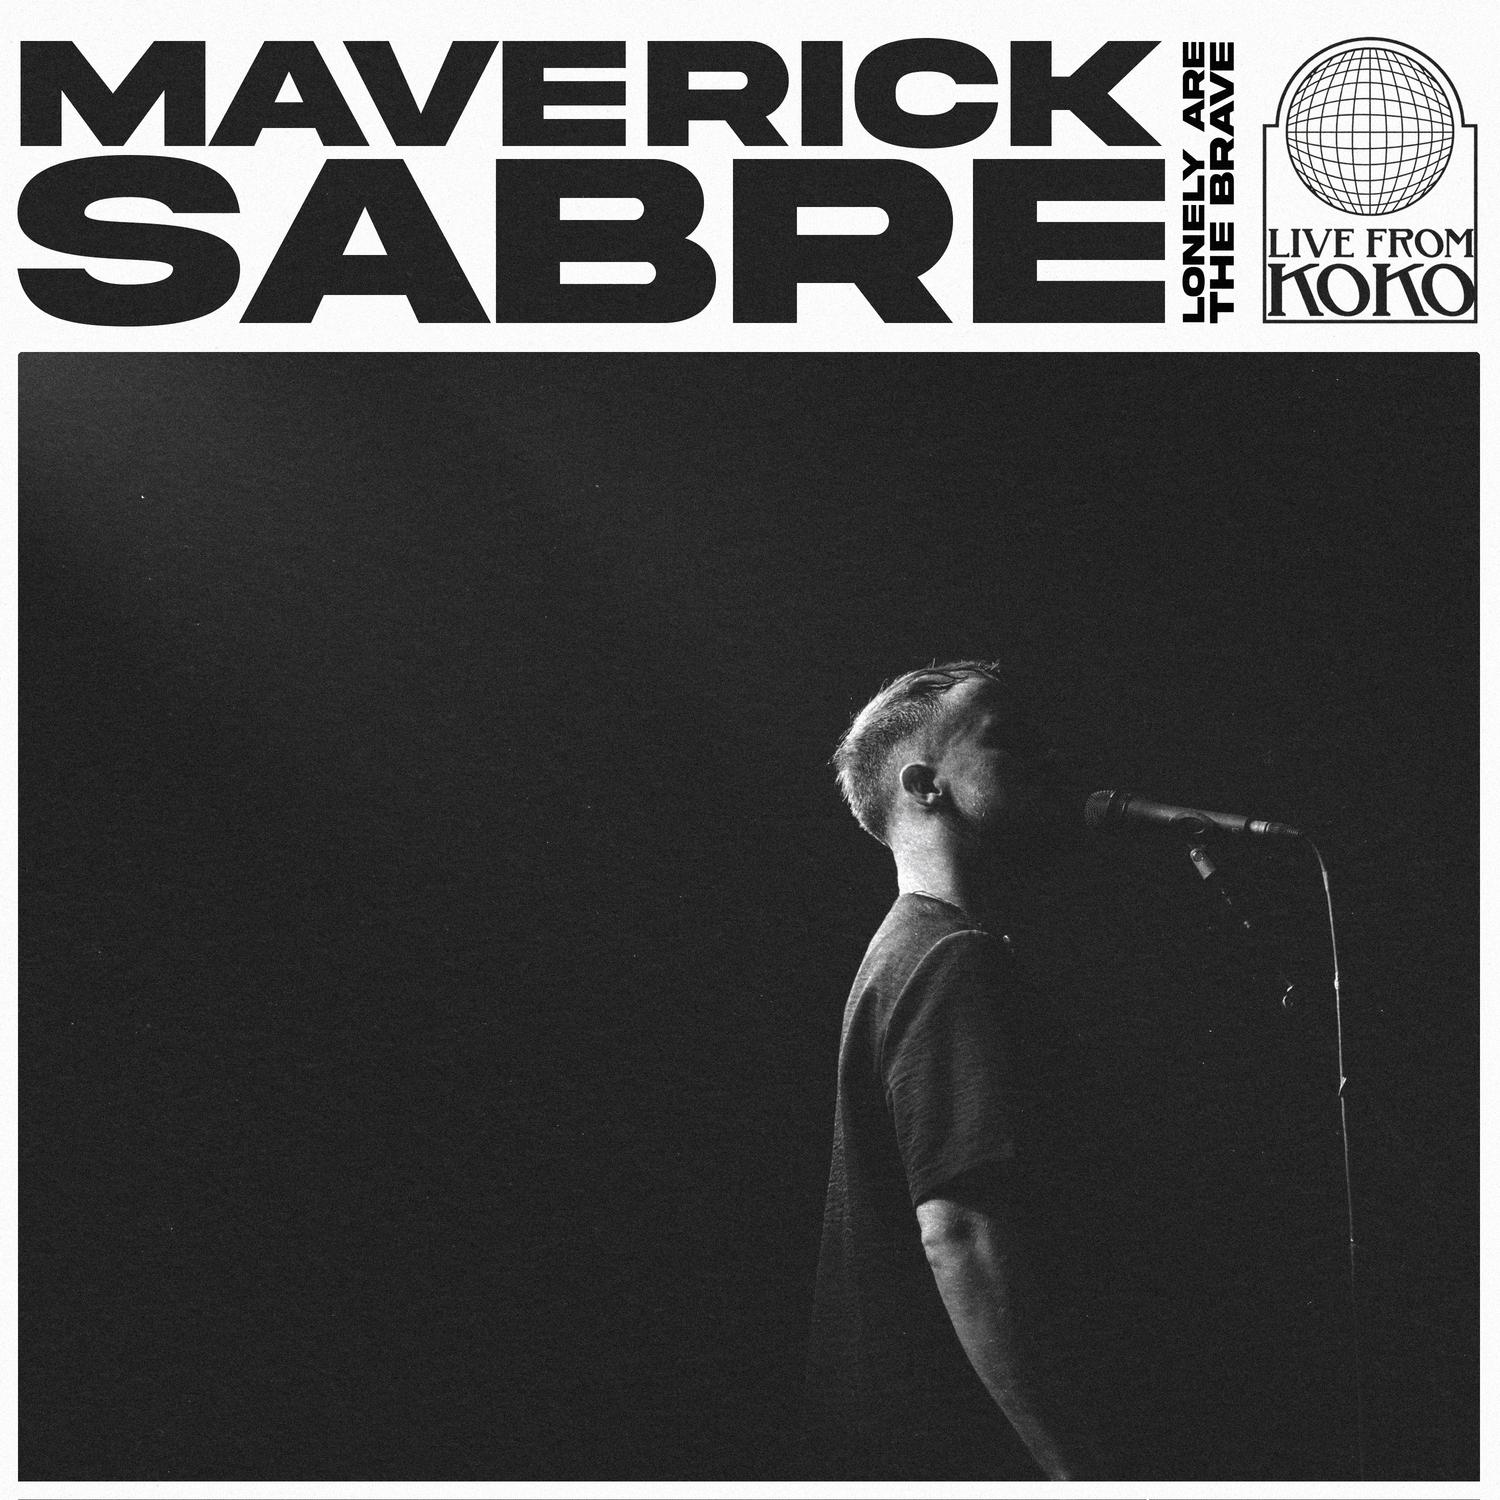 Maverick Sabre - Cold Game (Live from KOKO)